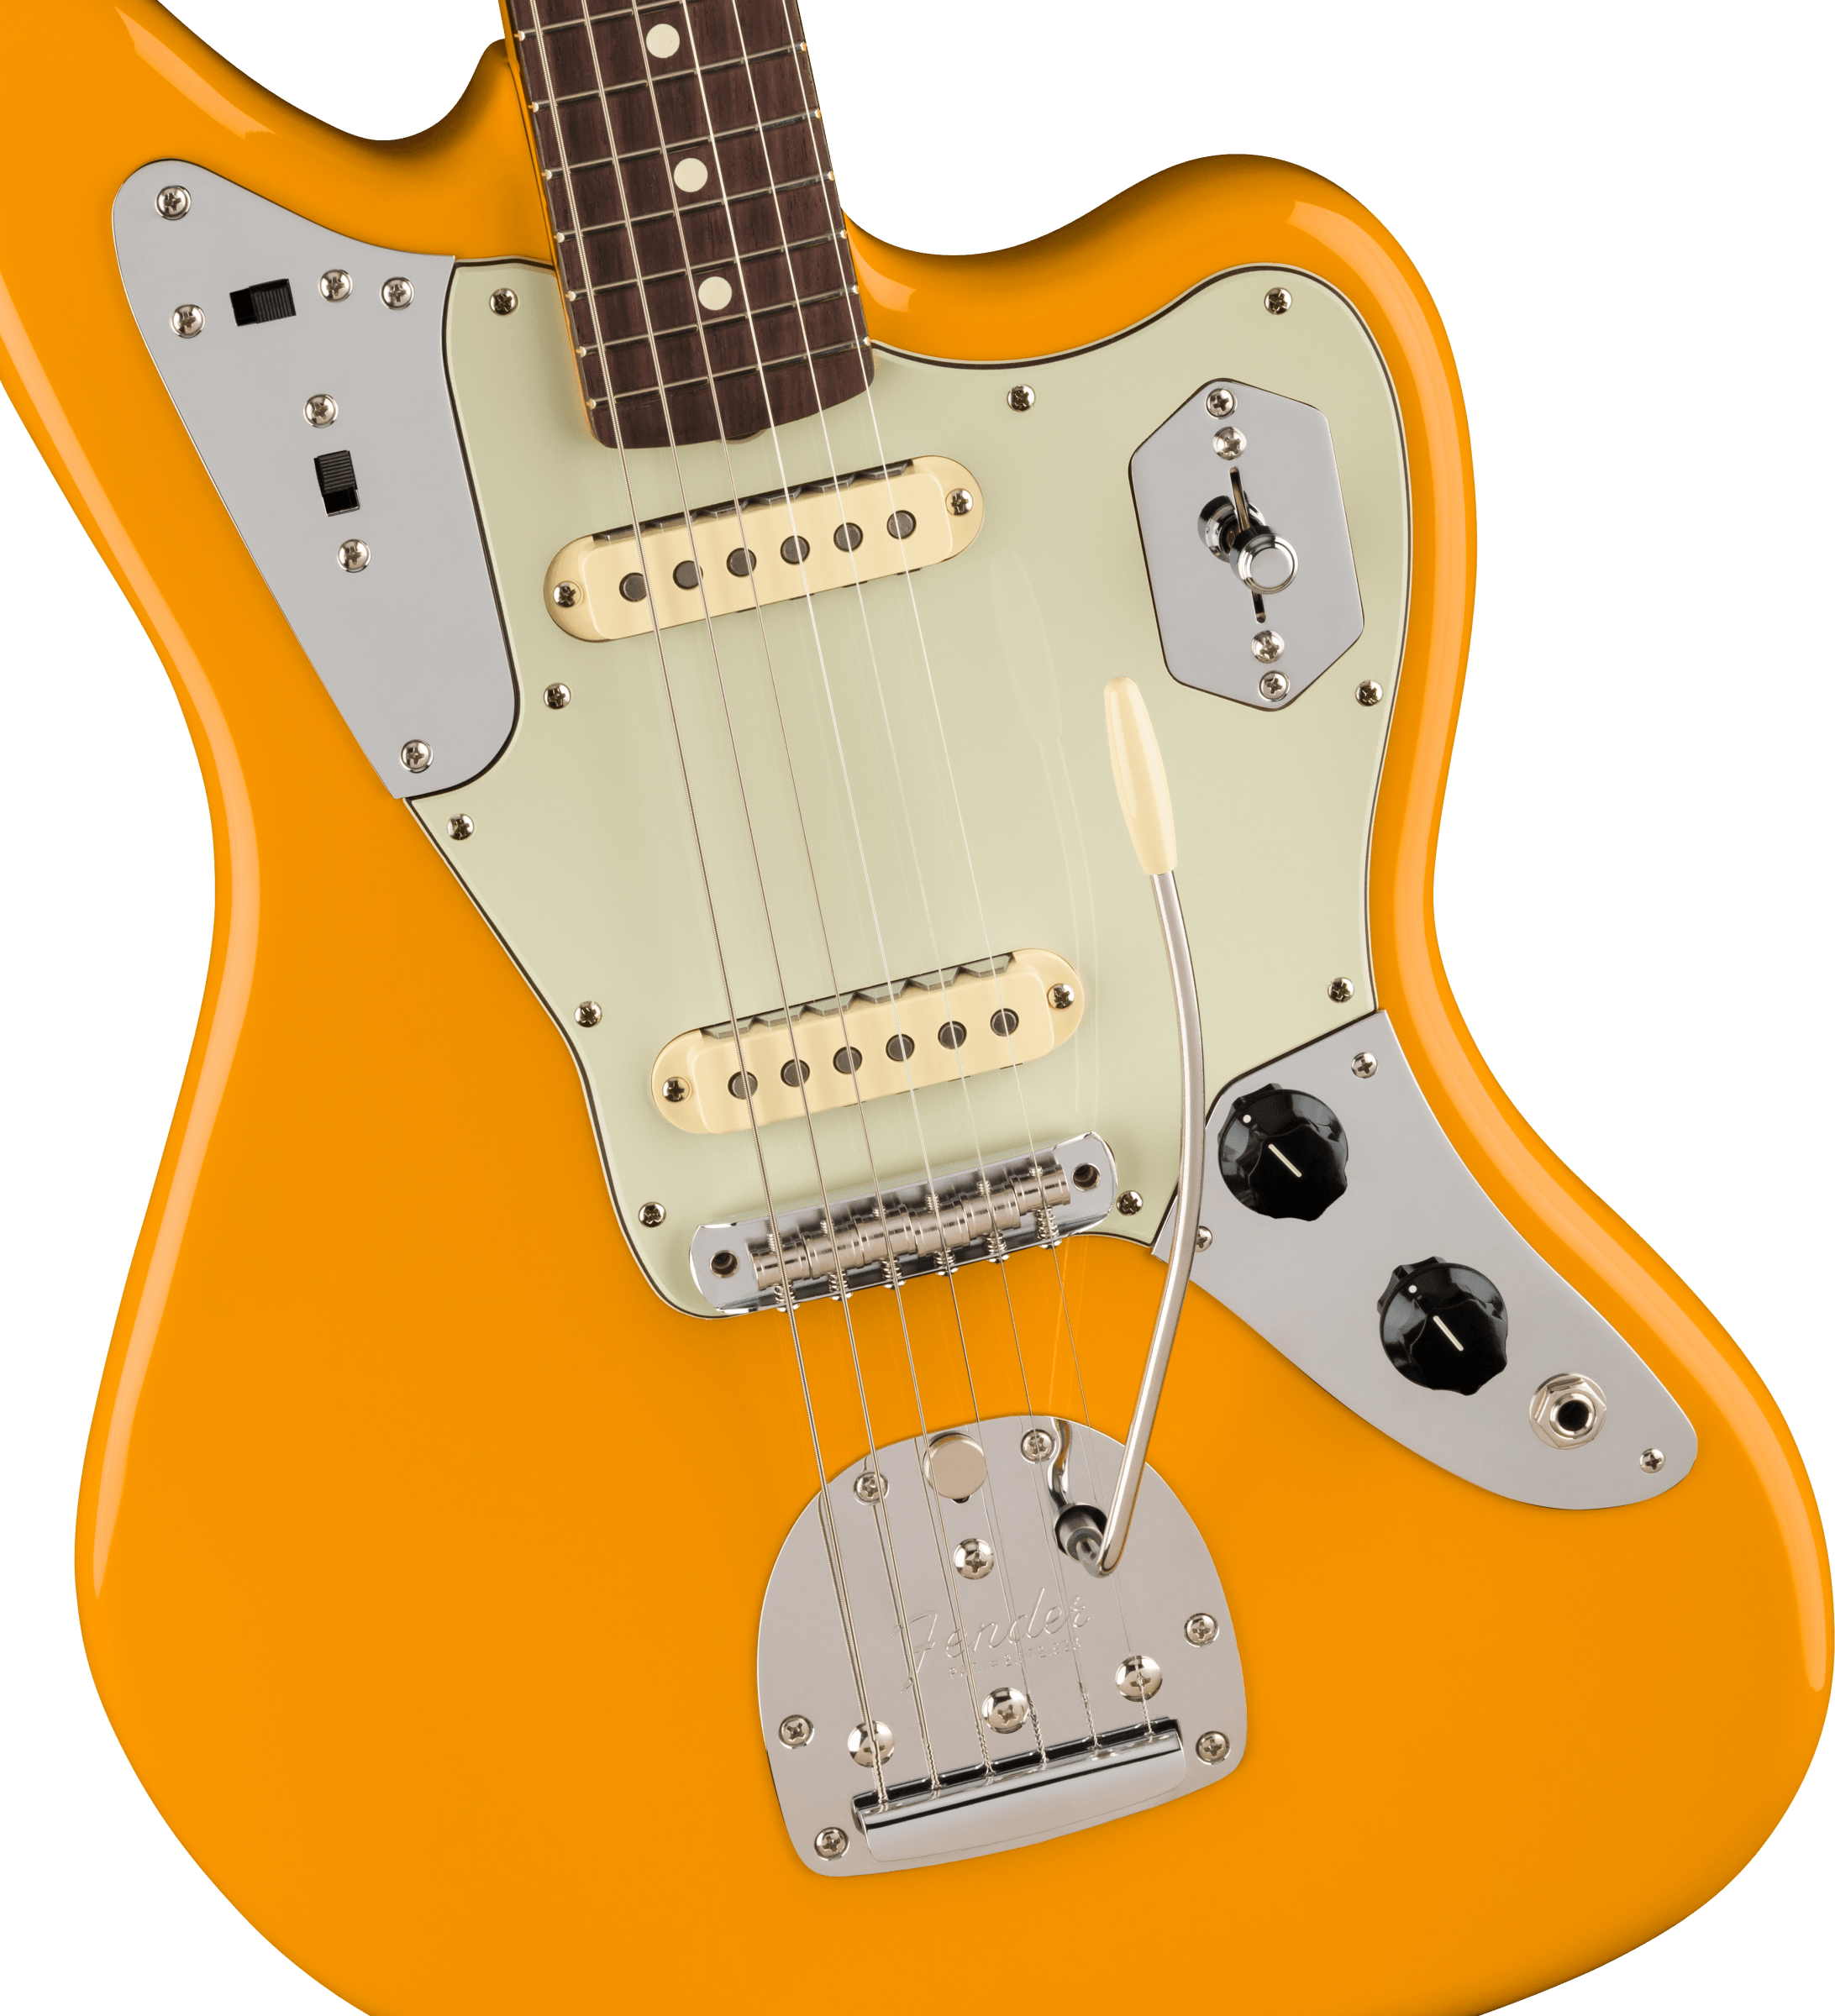 Fender Jaguar Johnny Marr Signature 2s Trem Rw - Fever Dream Yellow - Retro-rock elektrische gitaar - Variation 2